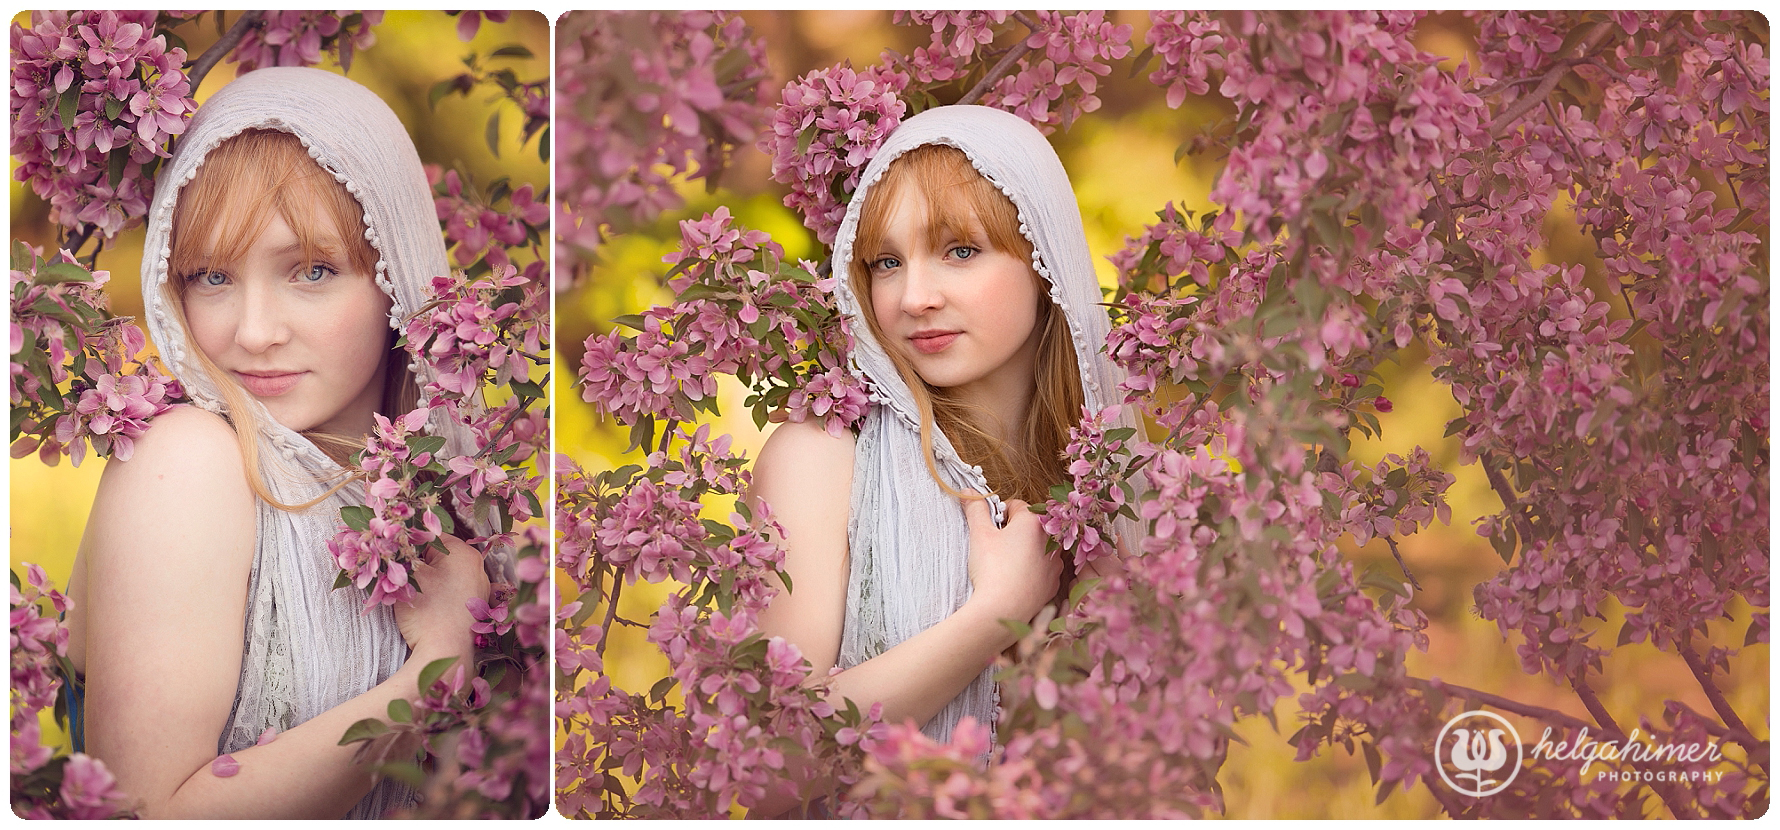 business-helgahimer-photography-sudbury-professional-photographer-personal-branding-cherry-blossom-senior-photo-girl-model